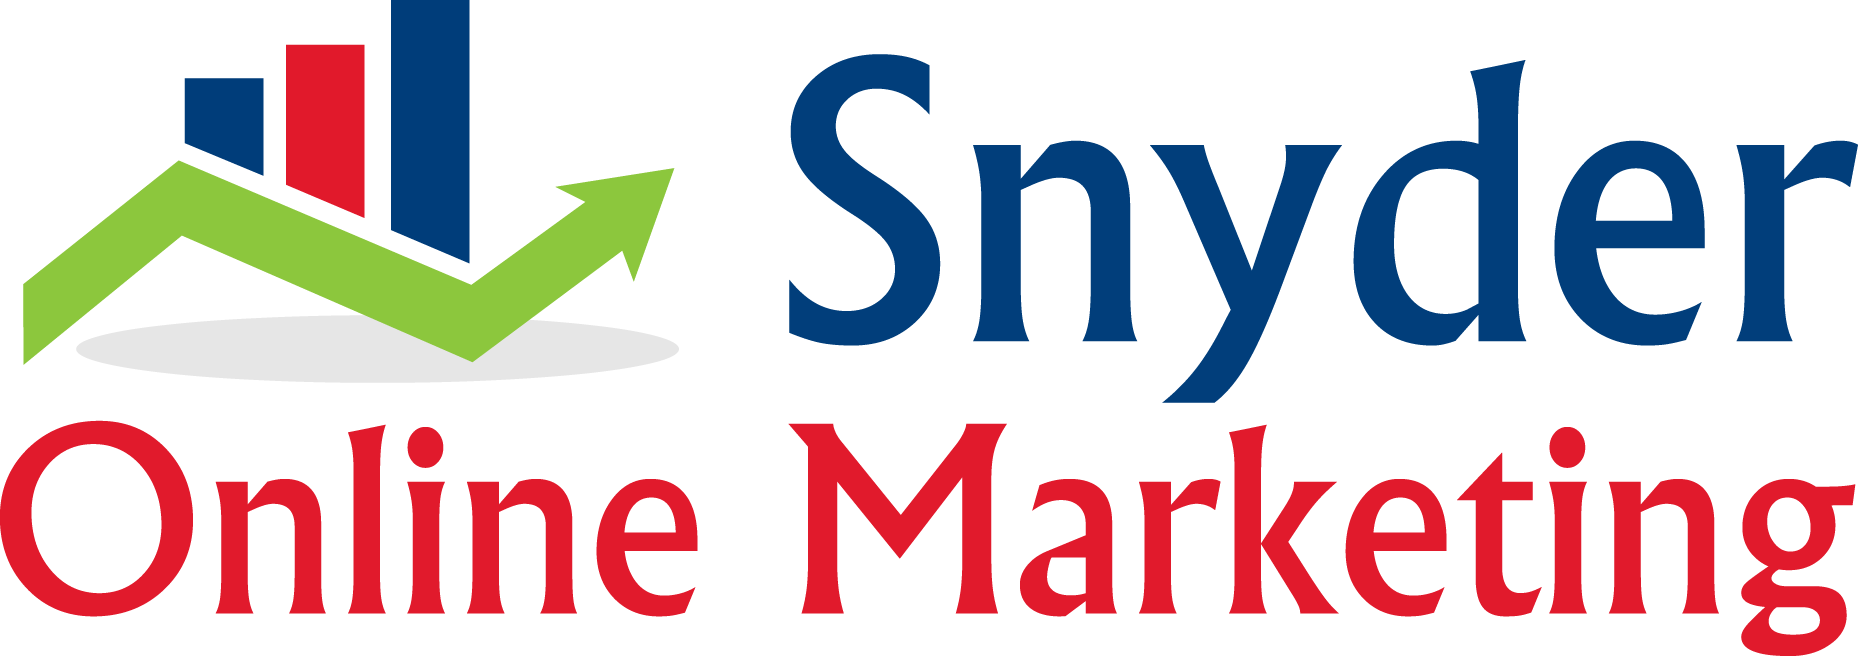 SNYDER ONLINE MARKETING LLC